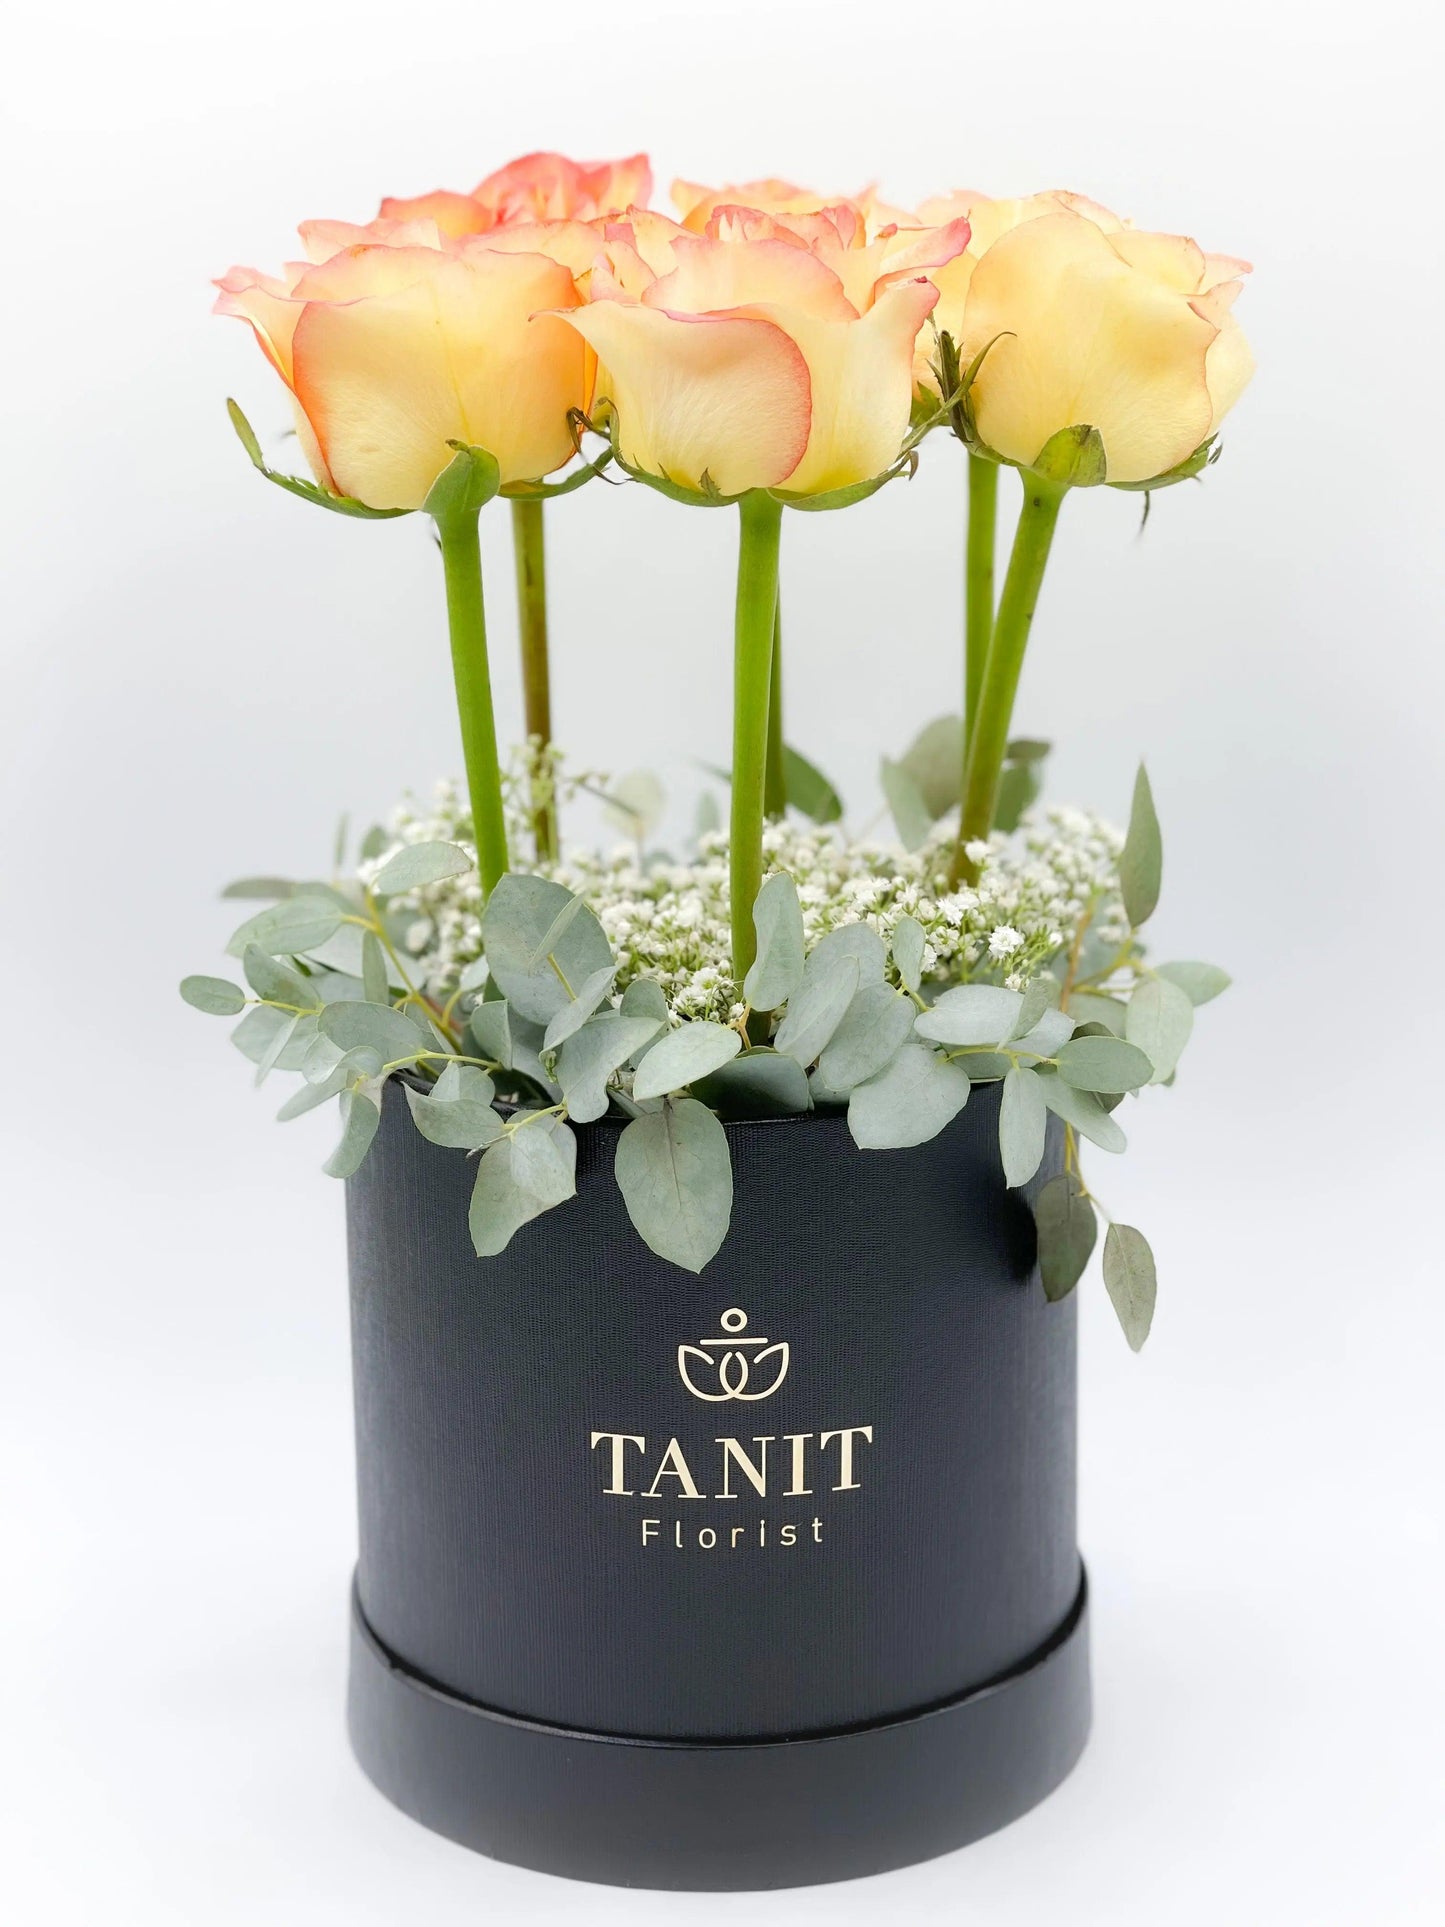 The Crown Tanit Florist